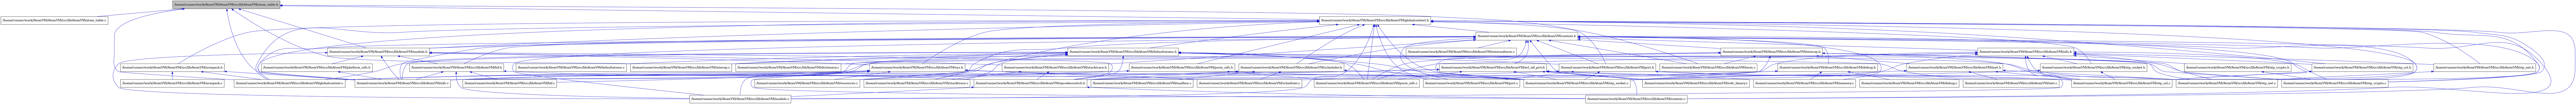 digraph {
    graph [bgcolor="#00000000"]
    node [shape=rectangle style=filled fillcolor="#FFFFFF" font=Helvetica padding=2]
    edge [color="#1414CE"]
    "11" [label="/home/runner/work/AtomVM/AtomVM/src/libAtomVM/bif.c" tooltip="/home/runner/work/AtomVM/AtomVM/src/libAtomVM/bif.c"]
    "48" [label="/home/runner/work/AtomVM/AtomVM/src/libAtomVM/dictionary.c" tooltip="/home/runner/work/AtomVM/AtomVM/src/libAtomVM/dictionary.c"]
    "10" [label="/home/runner/work/AtomVM/AtomVM/src/libAtomVM/bif.h" tooltip="/home/runner/work/AtomVM/AtomVM/src/libAtomVM/bif.h"]
    "33" [label="/home/runner/work/AtomVM/AtomVM/src/libAtomVM/platform_nifs.h" tooltip="/home/runner/work/AtomVM/AtomVM/src/libAtomVM/platform_nifs.h"]
    "21" [label="/home/runner/work/AtomVM/AtomVM/src/libAtomVM/posix_nifs.c" tooltip="/home/runner/work/AtomVM/AtomVM/src/libAtomVM/posix_nifs.c"]
    "49" [label="/home/runner/work/AtomVM/AtomVM/src/libAtomVM/posix_nifs.h" tooltip="/home/runner/work/AtomVM/AtomVM/src/libAtomVM/posix_nifs.h"]
    "47" [label="/home/runner/work/AtomVM/AtomVM/src/libAtomVM/defaultatoms.c" tooltip="/home/runner/work/AtomVM/AtomVM/src/libAtomVM/defaultatoms.c"]
    "46" [label="/home/runner/work/AtomVM/AtomVM/src/libAtomVM/defaultatoms.h" tooltip="/home/runner/work/AtomVM/AtomVM/src/libAtomVM/defaultatoms.h"]
    "27" [label="/home/runner/work/AtomVM/AtomVM/src/libAtomVM/inet.c" tooltip="/home/runner/work/AtomVM/AtomVM/src/libAtomVM/inet.c"]
    "26" [label="/home/runner/work/AtomVM/AtomVM/src/libAtomVM/inet.h" tooltip="/home/runner/work/AtomVM/AtomVM/src/libAtomVM/inet.h"]
    "17" [label="/home/runner/work/AtomVM/AtomVM/src/libAtomVM/scheduler.c" tooltip="/home/runner/work/AtomVM/AtomVM/src/libAtomVM/scheduler.c"]
    "44" [label="/home/runner/work/AtomVM/AtomVM/src/libAtomVM/scheduler.h" tooltip="/home/runner/work/AtomVM/AtomVM/src/libAtomVM/scheduler.h"]
    "8" [label="/home/runner/work/AtomVM/AtomVM/src/libAtomVM/context.c" tooltip="/home/runner/work/AtomVM/AtomVM/src/libAtomVM/context.c"]
    "9" [label="/home/runner/work/AtomVM/AtomVM/src/libAtomVM/context.h" tooltip="/home/runner/work/AtomVM/AtomVM/src/libAtomVM/context.h"]
    "42" [label="/home/runner/work/AtomVM/AtomVM/src/libAtomVM/port.c" tooltip="/home/runner/work/AtomVM/AtomVM/src/libAtomVM/port.c"]
    "43" [label="/home/runner/work/AtomVM/AtomVM/src/libAtomVM/port.h" tooltip="/home/runner/work/AtomVM/AtomVM/src/libAtomVM/port.h"]
    "2" [label="/home/runner/work/AtomVM/AtomVM/src/libAtomVM/atom_table.c" tooltip="/home/runner/work/AtomVM/AtomVM/src/libAtomVM/atom_table.c"]
    "1" [label="/home/runner/work/AtomVM/AtomVM/src/libAtomVM/atom_table.h" tooltip="/home/runner/work/AtomVM/AtomVM/src/libAtomVM/atom_table.h" fillcolor="#BFBFBF"]
    "35" [label="/home/runner/work/AtomVM/AtomVM/src/libAtomVM/stacktrace.c" tooltip="/home/runner/work/AtomVM/AtomVM/src/libAtomVM/stacktrace.c"]
    "34" [label="/home/runner/work/AtomVM/AtomVM/src/libAtomVM/stacktrace.h" tooltip="/home/runner/work/AtomVM/AtomVM/src/libAtomVM/stacktrace.h"]
    "22" [label="/home/runner/work/AtomVM/AtomVM/src/libAtomVM/refc_binary.c" tooltip="/home/runner/work/AtomVM/AtomVM/src/libAtomVM/refc_binary.c"]
    "45" [label="/home/runner/work/AtomVM/AtomVM/src/libAtomVM/mailbox.c" tooltip="/home/runner/work/AtomVM/AtomVM/src/libAtomVM/mailbox.c"]
    "12" [label="/home/runner/work/AtomVM/AtomVM/src/libAtomVM/module.c" tooltip="/home/runner/work/AtomVM/AtomVM/src/libAtomVM/module.c"]
    "32" [label="/home/runner/work/AtomVM/AtomVM/src/libAtomVM/module.h" tooltip="/home/runner/work/AtomVM/AtomVM/src/libAtomVM/module.h"]
    "6" [label="/home/runner/work/AtomVM/AtomVM/src/libAtomVM/avmpack.c" tooltip="/home/runner/work/AtomVM/AtomVM/src/libAtomVM/avmpack.c"]
    "5" [label="/home/runner/work/AtomVM/AtomVM/src/libAtomVM/avmpack.h" tooltip="/home/runner/work/AtomVM/AtomVM/src/libAtomVM/avmpack.h"]
    "31" [label="/home/runner/work/AtomVM/AtomVM/src/libAtomVM/term.c" tooltip="/home/runner/work/AtomVM/AtomVM/src/libAtomVM/term.c"]
    "29" [label="/home/runner/work/AtomVM/AtomVM/src/libAtomVM/interop.c" tooltip="/home/runner/work/AtomVM/AtomVM/src/libAtomVM/interop.c"]
    "20" [label="/home/runner/work/AtomVM/AtomVM/src/libAtomVM/otp_ssl.c" tooltip="/home/runner/work/AtomVM/AtomVM/src/libAtomVM/otp_ssl.c"]
    "25" [label="/home/runner/work/AtomVM/AtomVM/src/libAtomVM/interop.h" tooltip="/home/runner/work/AtomVM/AtomVM/src/libAtomVM/interop.h"]
    "41" [label="/home/runner/work/AtomVM/AtomVM/src/libAtomVM/otp_ssl.h" tooltip="/home/runner/work/AtomVM/AtomVM/src/libAtomVM/otp_ssl.h"]
    "23" [label="/home/runner/work/AtomVM/AtomVM/src/libAtomVM/resources.c" tooltip="/home/runner/work/AtomVM/AtomVM/src/libAtomVM/resources.c"]
    "30" [label="/home/runner/work/AtomVM/AtomVM/src/libAtomVM/otp_crypto.c" tooltip="/home/runner/work/AtomVM/AtomVM/src/libAtomVM/otp_crypto.c"]
    "38" [label="/home/runner/work/AtomVM/AtomVM/src/libAtomVM/otp_crypto.h" tooltip="/home/runner/work/AtomVM/AtomVM/src/libAtomVM/otp_crypto.h"]
    "28" [label="/home/runner/work/AtomVM/AtomVM/src/libAtomVM/otp_net.c" tooltip="/home/runner/work/AtomVM/AtomVM/src/libAtomVM/otp_net.c"]
    "39" [label="/home/runner/work/AtomVM/AtomVM/src/libAtomVM/otp_net.h" tooltip="/home/runner/work/AtomVM/AtomVM/src/libAtomVM/otp_net.h"]
    "18" [label="/home/runner/work/AtomVM/AtomVM/src/libAtomVM/erl_nif_priv.h" tooltip="/home/runner/work/AtomVM/AtomVM/src/libAtomVM/erl_nif_priv.h"]
    "36" [label="/home/runner/work/AtomVM/AtomVM/src/libAtomVM/sys.h" tooltip="/home/runner/work/AtomVM/AtomVM/src/libAtomVM/sys.h"]
    "7" [label="/home/runner/work/AtomVM/AtomVM/src/libAtomVM/nifs.c" tooltip="/home/runner/work/AtomVM/AtomVM/src/libAtomVM/nifs.c"]
    "37" [label="/home/runner/work/AtomVM/AtomVM/src/libAtomVM/nifs.h" tooltip="/home/runner/work/AtomVM/AtomVM/src/libAtomVM/nifs.h"]
    "13" [label="/home/runner/work/AtomVM/AtomVM/src/libAtomVM/opcodesswitch.h" tooltip="/home/runner/work/AtomVM/AtomVM/src/libAtomVM/opcodesswitch.h"]
    "15" [label="/home/runner/work/AtomVM/AtomVM/src/libAtomVM/debug.c" tooltip="/home/runner/work/AtomVM/AtomVM/src/libAtomVM/debug.c"]
    "14" [label="/home/runner/work/AtomVM/AtomVM/src/libAtomVM/debug.h" tooltip="/home/runner/work/AtomVM/AtomVM/src/libAtomVM/debug.h"]
    "3" [label="/home/runner/work/AtomVM/AtomVM/src/libAtomVM/globalcontext.c" tooltip="/home/runner/work/AtomVM/AtomVM/src/libAtomVM/globalcontext.c"]
    "4" [label="/home/runner/work/AtomVM/AtomVM/src/libAtomVM/globalcontext.h" tooltip="/home/runner/work/AtomVM/AtomVM/src/libAtomVM/globalcontext.h"]
    "16" [label="/home/runner/work/AtomVM/AtomVM/src/libAtomVM/memory.c" tooltip="/home/runner/work/AtomVM/AtomVM/src/libAtomVM/memory.c"]
    "19" [label="/home/runner/work/AtomVM/AtomVM/src/libAtomVM/otp_socket.c" tooltip="/home/runner/work/AtomVM/AtomVM/src/libAtomVM/otp_socket.c"]
    "40" [label="/home/runner/work/AtomVM/AtomVM/src/libAtomVM/otp_socket.h" tooltip="/home/runner/work/AtomVM/AtomVM/src/libAtomVM/otp_socket.h"]
    "24" [label="/home/runner/work/AtomVM/AtomVM/src/libAtomVM/externalterm.c" tooltip="/home/runner/work/AtomVM/AtomVM/src/libAtomVM/externalterm.c"]
    "10" -> "11" [dir=back tooltip="include"]
    "10" -> "12" [dir=back tooltip="include"]
    "10" -> "7" [dir=back tooltip="include"]
    "10" -> "13" [dir=back tooltip="include"]
    "33" -> "7" [dir=back tooltip="include"]
    "49" -> "3" [dir=back tooltip="include"]
    "49" -> "7" [dir=back tooltip="include"]
    "49" -> "19" [dir=back tooltip="include"]
    "49" -> "21" [dir=back tooltip="include"]
    "46" -> "11" [dir=back tooltip="include"]
    "46" -> "47" [dir=back tooltip="include"]
    "46" -> "48" [dir=back tooltip="include"]
    "46" -> "3" [dir=back tooltip="include"]
    "46" -> "29" [dir=back tooltip="include"]
    "46" -> "7" [dir=back tooltip="include"]
    "46" -> "13" [dir=back tooltip="include"]
    "46" -> "30" [dir=back tooltip="include"]
    "46" -> "28" [dir=back tooltip="include"]
    "46" -> "19" [dir=back tooltip="include"]
    "46" -> "20" [dir=back tooltip="include"]
    "46" -> "42" [dir=back tooltip="include"]
    "46" -> "43" [dir=back tooltip="include"]
    "46" -> "21" [dir=back tooltip="include"]
    "46" -> "23" [dir=back tooltip="include"]
    "46" -> "35" [dir=back tooltip="include"]
    "26" -> "27" [dir=back tooltip="include"]
    "26" -> "28" [dir=back tooltip="include"]
    "26" -> "19" [dir=back tooltip="include"]
    "26" -> "20" [dir=back tooltip="include"]
    "44" -> "45" [dir=back tooltip="include"]
    "44" -> "7" [dir=back tooltip="include"]
    "44" -> "13" [dir=back tooltip="include"]
    "44" -> "19" [dir=back tooltip="include"]
    "44" -> "17" [dir=back tooltip="include"]
    "9" -> "10" [dir=back tooltip="include"]
    "9" -> "8" [dir=back tooltip="include"]
    "9" -> "14" [dir=back tooltip="include"]
    "9" -> "18" [dir=back tooltip="include"]
    "9" -> "24" [dir=back tooltip="include"]
    "9" -> "3" [dir=back tooltip="include"]
    "9" -> "25" [dir=back tooltip="include"]
    "9" -> "16" [dir=back tooltip="include"]
    "9" -> "12" [dir=back tooltip="include"]
    "9" -> "32" [dir=back tooltip="include"]
    "9" -> "7" [dir=back tooltip="include"]
    "9" -> "37" [dir=back tooltip="include"]
    "9" -> "30" [dir=back tooltip="include"]
    "9" -> "28" [dir=back tooltip="include"]
    "9" -> "19" [dir=back tooltip="include"]
    "9" -> "20" [dir=back tooltip="include"]
    "9" -> "42" [dir=back tooltip="include"]
    "9" -> "43" [dir=back tooltip="include"]
    "9" -> "22" [dir=back tooltip="include"]
    "9" -> "23" [dir=back tooltip="include"]
    "9" -> "44" [dir=back tooltip="include"]
    "9" -> "34" [dir=back tooltip="include"]
    "9" -> "31" [dir=back tooltip="include"]
    "43" -> "27" [dir=back tooltip="include"]
    "43" -> "7" [dir=back tooltip="include"]
    "43" -> "28" [dir=back tooltip="include"]
    "43" -> "19" [dir=back tooltip="include"]
    "43" -> "20" [dir=back tooltip="include"]
    "43" -> "42" [dir=back tooltip="include"]
    "1" -> "2" [dir=back tooltip="include"]
    "1" -> "3" [dir=back tooltip="include"]
    "1" -> "4" [dir=back tooltip="include"]
    "1" -> "29" [dir=back tooltip="include"]
    "1" -> "32" [dir=back tooltip="include"]
    "1" -> "7" [dir=back tooltip="include"]
    "1" -> "31" [dir=back tooltip="include"]
    "34" -> "13" [dir=back tooltip="include"]
    "34" -> "35" [dir=back tooltip="include"]
    "32" -> "10" [dir=back tooltip="include"]
    "32" -> "12" [dir=back tooltip="include"]
    "32" -> "7" [dir=back tooltip="include"]
    "32" -> "13" [dir=back tooltip="include"]
    "32" -> "33" [dir=back tooltip="include"]
    "32" -> "34" [dir=back tooltip="include"]
    "32" -> "36" [dir=back tooltip="include"]
    "5" -> "6" [dir=back tooltip="include"]
    "5" -> "3" [dir=back tooltip="include"]
    "5" -> "7" [dir=back tooltip="include"]
    "25" -> "26" [dir=back tooltip="include"]
    "25" -> "29" [dir=back tooltip="include"]
    "25" -> "7" [dir=back tooltip="include"]
    "25" -> "30" [dir=back tooltip="include"]
    "25" -> "28" [dir=back tooltip="include"]
    "25" -> "19" [dir=back tooltip="include"]
    "25" -> "20" [dir=back tooltip="include"]
    "25" -> "21" [dir=back tooltip="include"]
    "25" -> "31" [dir=back tooltip="include"]
    "41" -> "20" [dir=back tooltip="include"]
    "38" -> "30" [dir=back tooltip="include"]
    "39" -> "28" [dir=back tooltip="include"]
    "18" -> "8" [dir=back tooltip="include"]
    "18" -> "3" [dir=back tooltip="include"]
    "18" -> "16" [dir=back tooltip="include"]
    "18" -> "19" [dir=back tooltip="include"]
    "18" -> "20" [dir=back tooltip="include"]
    "18" -> "21" [dir=back tooltip="include"]
    "18" -> "22" [dir=back tooltip="include"]
    "18" -> "23" [dir=back tooltip="include"]
    "36" -> "8" [dir=back tooltip="include"]
    "36" -> "3" [dir=back tooltip="include"]
    "36" -> "12" [dir=back tooltip="include"]
    "36" -> "7" [dir=back tooltip="include"]
    "36" -> "19" [dir=back tooltip="include"]
    "36" -> "23" [dir=back tooltip="include"]
    "36" -> "17" [dir=back tooltip="include"]
    "37" -> "12" [dir=back tooltip="include"]
    "37" -> "7" [dir=back tooltip="include"]
    "37" -> "13" [dir=back tooltip="include"]
    "37" -> "30" [dir=back tooltip="include"]
    "37" -> "38" [dir=back tooltip="include"]
    "37" -> "28" [dir=back tooltip="include"]
    "37" -> "39" [dir=back tooltip="include"]
    "37" -> "19" [dir=back tooltip="include"]
    "37" -> "40" [dir=back tooltip="include"]
    "37" -> "20" [dir=back tooltip="include"]
    "37" -> "41" [dir=back tooltip="include"]
    "37" -> "21" [dir=back tooltip="include"]
    "13" -> "8" [dir=back tooltip="include"]
    "13" -> "12" [dir=back tooltip="include"]
    "14" -> "15" [dir=back tooltip="include"]
    "14" -> "16" [dir=back tooltip="include"]
    "14" -> "13" [dir=back tooltip="include"]
    "14" -> "17" [dir=back tooltip="include"]
    "4" -> "5" [dir=back tooltip="include"]
    "4" -> "8" [dir=back tooltip="include"]
    "4" -> "9" [dir=back tooltip="include"]
    "4" -> "46" [dir=back tooltip="include"]
    "4" -> "3" [dir=back tooltip="include"]
    "4" -> "12" [dir=back tooltip="include"]
    "4" -> "32" [dir=back tooltip="include"]
    "4" -> "7" [dir=back tooltip="include"]
    "4" -> "30" [dir=back tooltip="include"]
    "4" -> "28" [dir=back tooltip="include"]
    "4" -> "39" [dir=back tooltip="include"]
    "4" -> "19" [dir=back tooltip="include"]
    "4" -> "40" [dir=back tooltip="include"]
    "4" -> "20" [dir=back tooltip="include"]
    "4" -> "41" [dir=back tooltip="include"]
    "4" -> "42" [dir=back tooltip="include"]
    "4" -> "43" [dir=back tooltip="include"]
    "4" -> "21" [dir=back tooltip="include"]
    "4" -> "49" [dir=back tooltip="include"]
    "4" -> "44" [dir=back tooltip="include"]
    "4" -> "35" [dir=back tooltip="include"]
    "4" -> "36" [dir=back tooltip="include"]
    "40" -> "19" [dir=back tooltip="include"]
    "40" -> "20" [dir=back tooltip="include"]
}